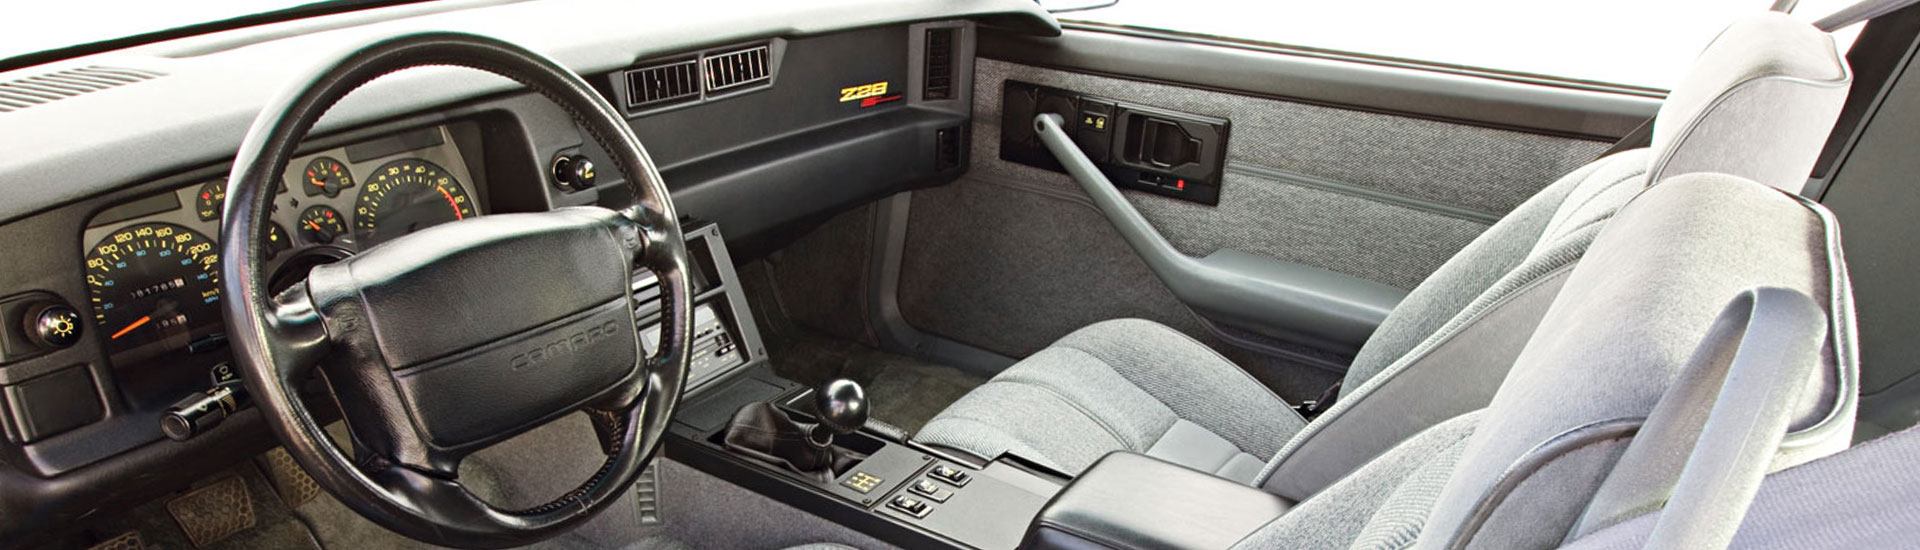 1992 Chevrolet Camaro Dash Kits